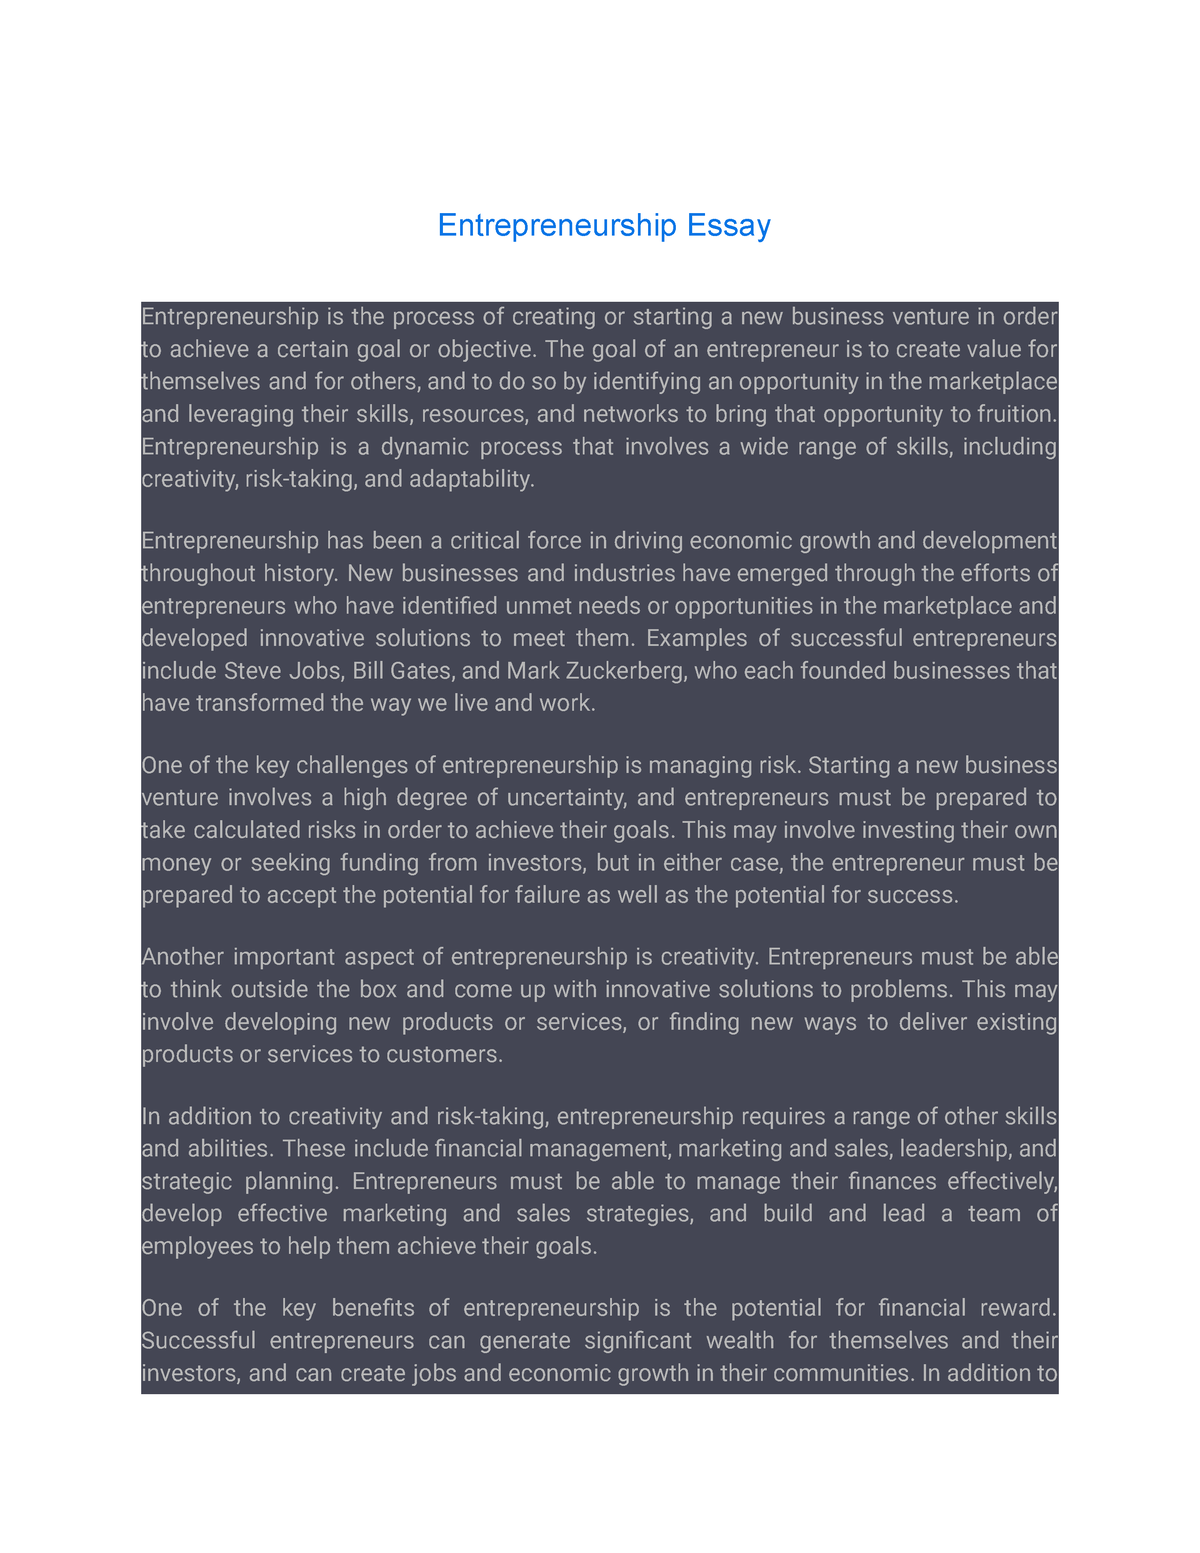 qualities of an entrepreneur essay